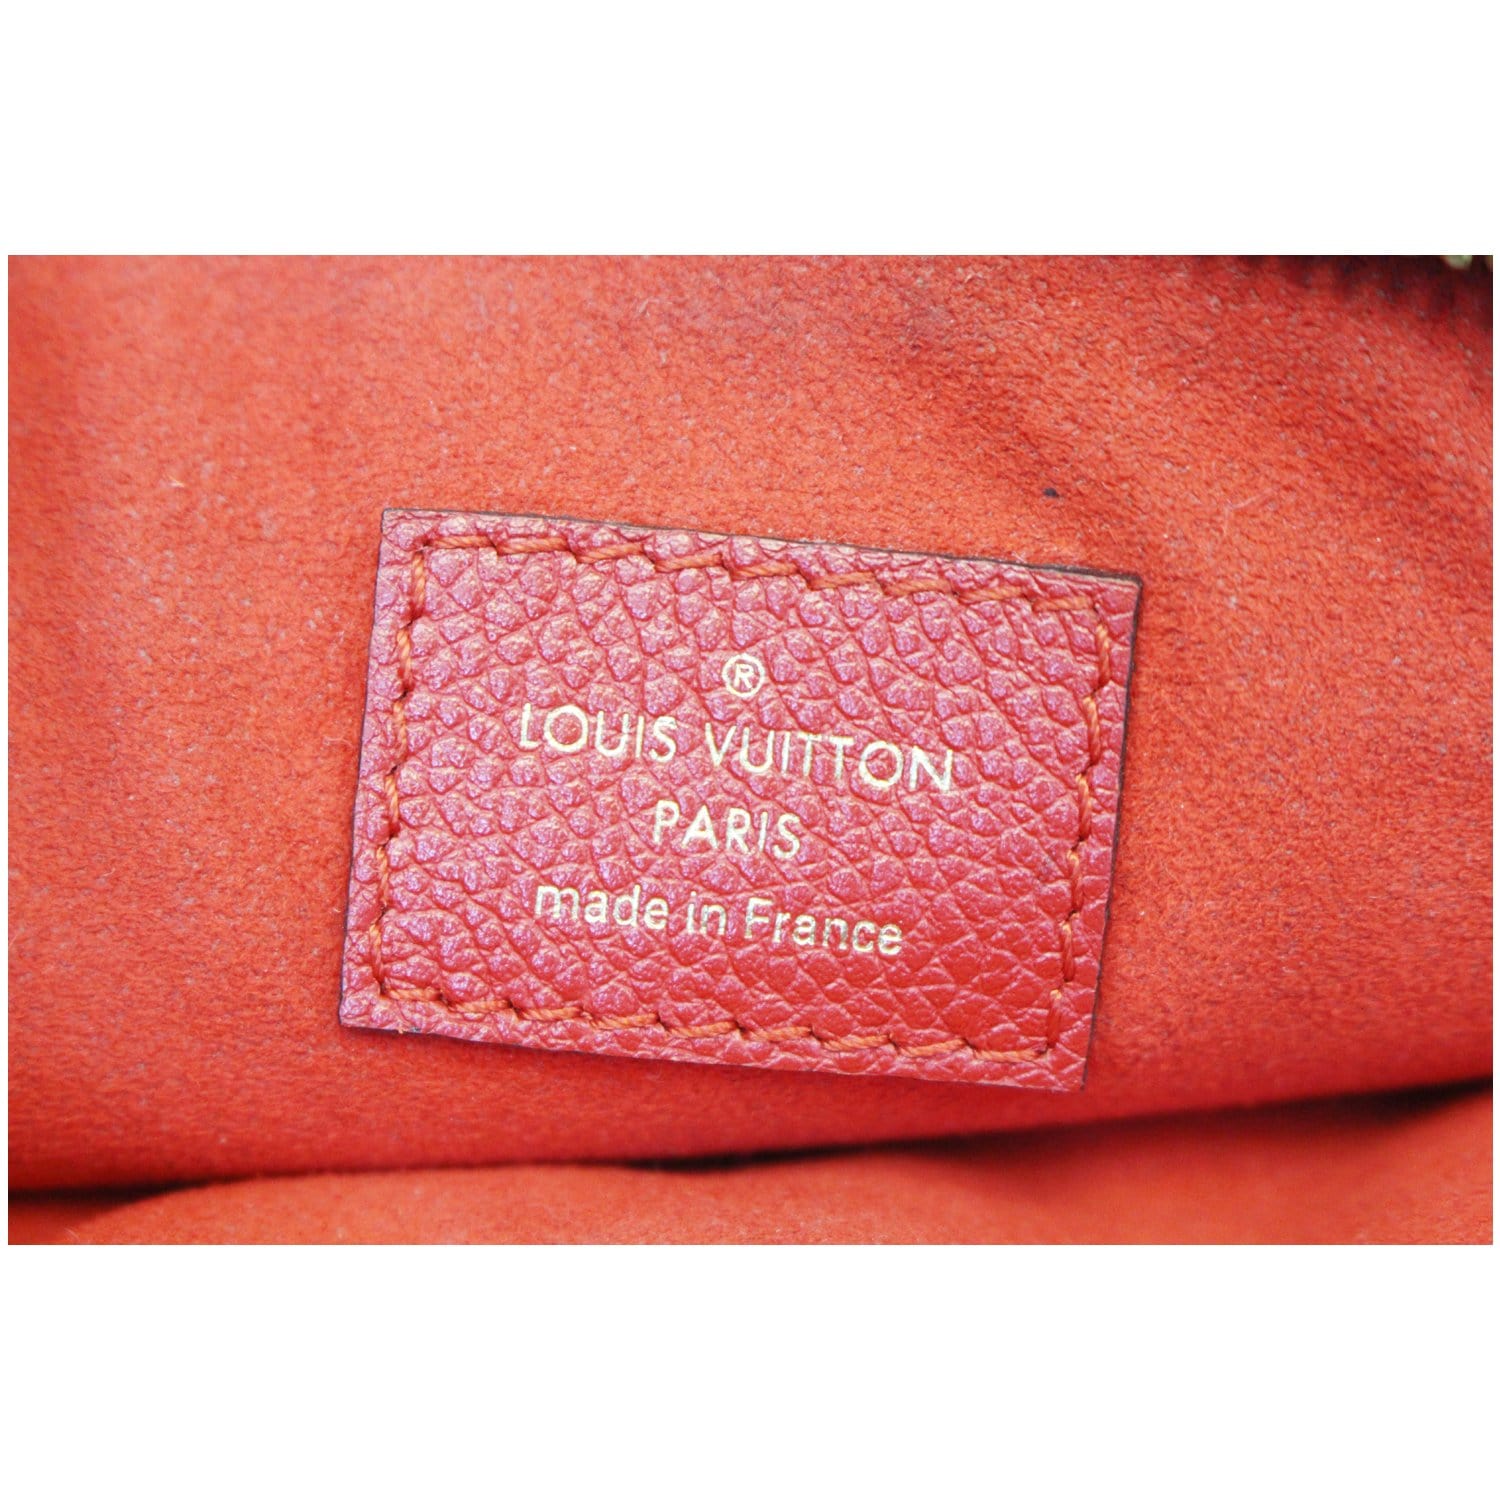 LOUIS VUITTON Twice Pochette Monogram Canvas Crossbody Bag Brown - 10%